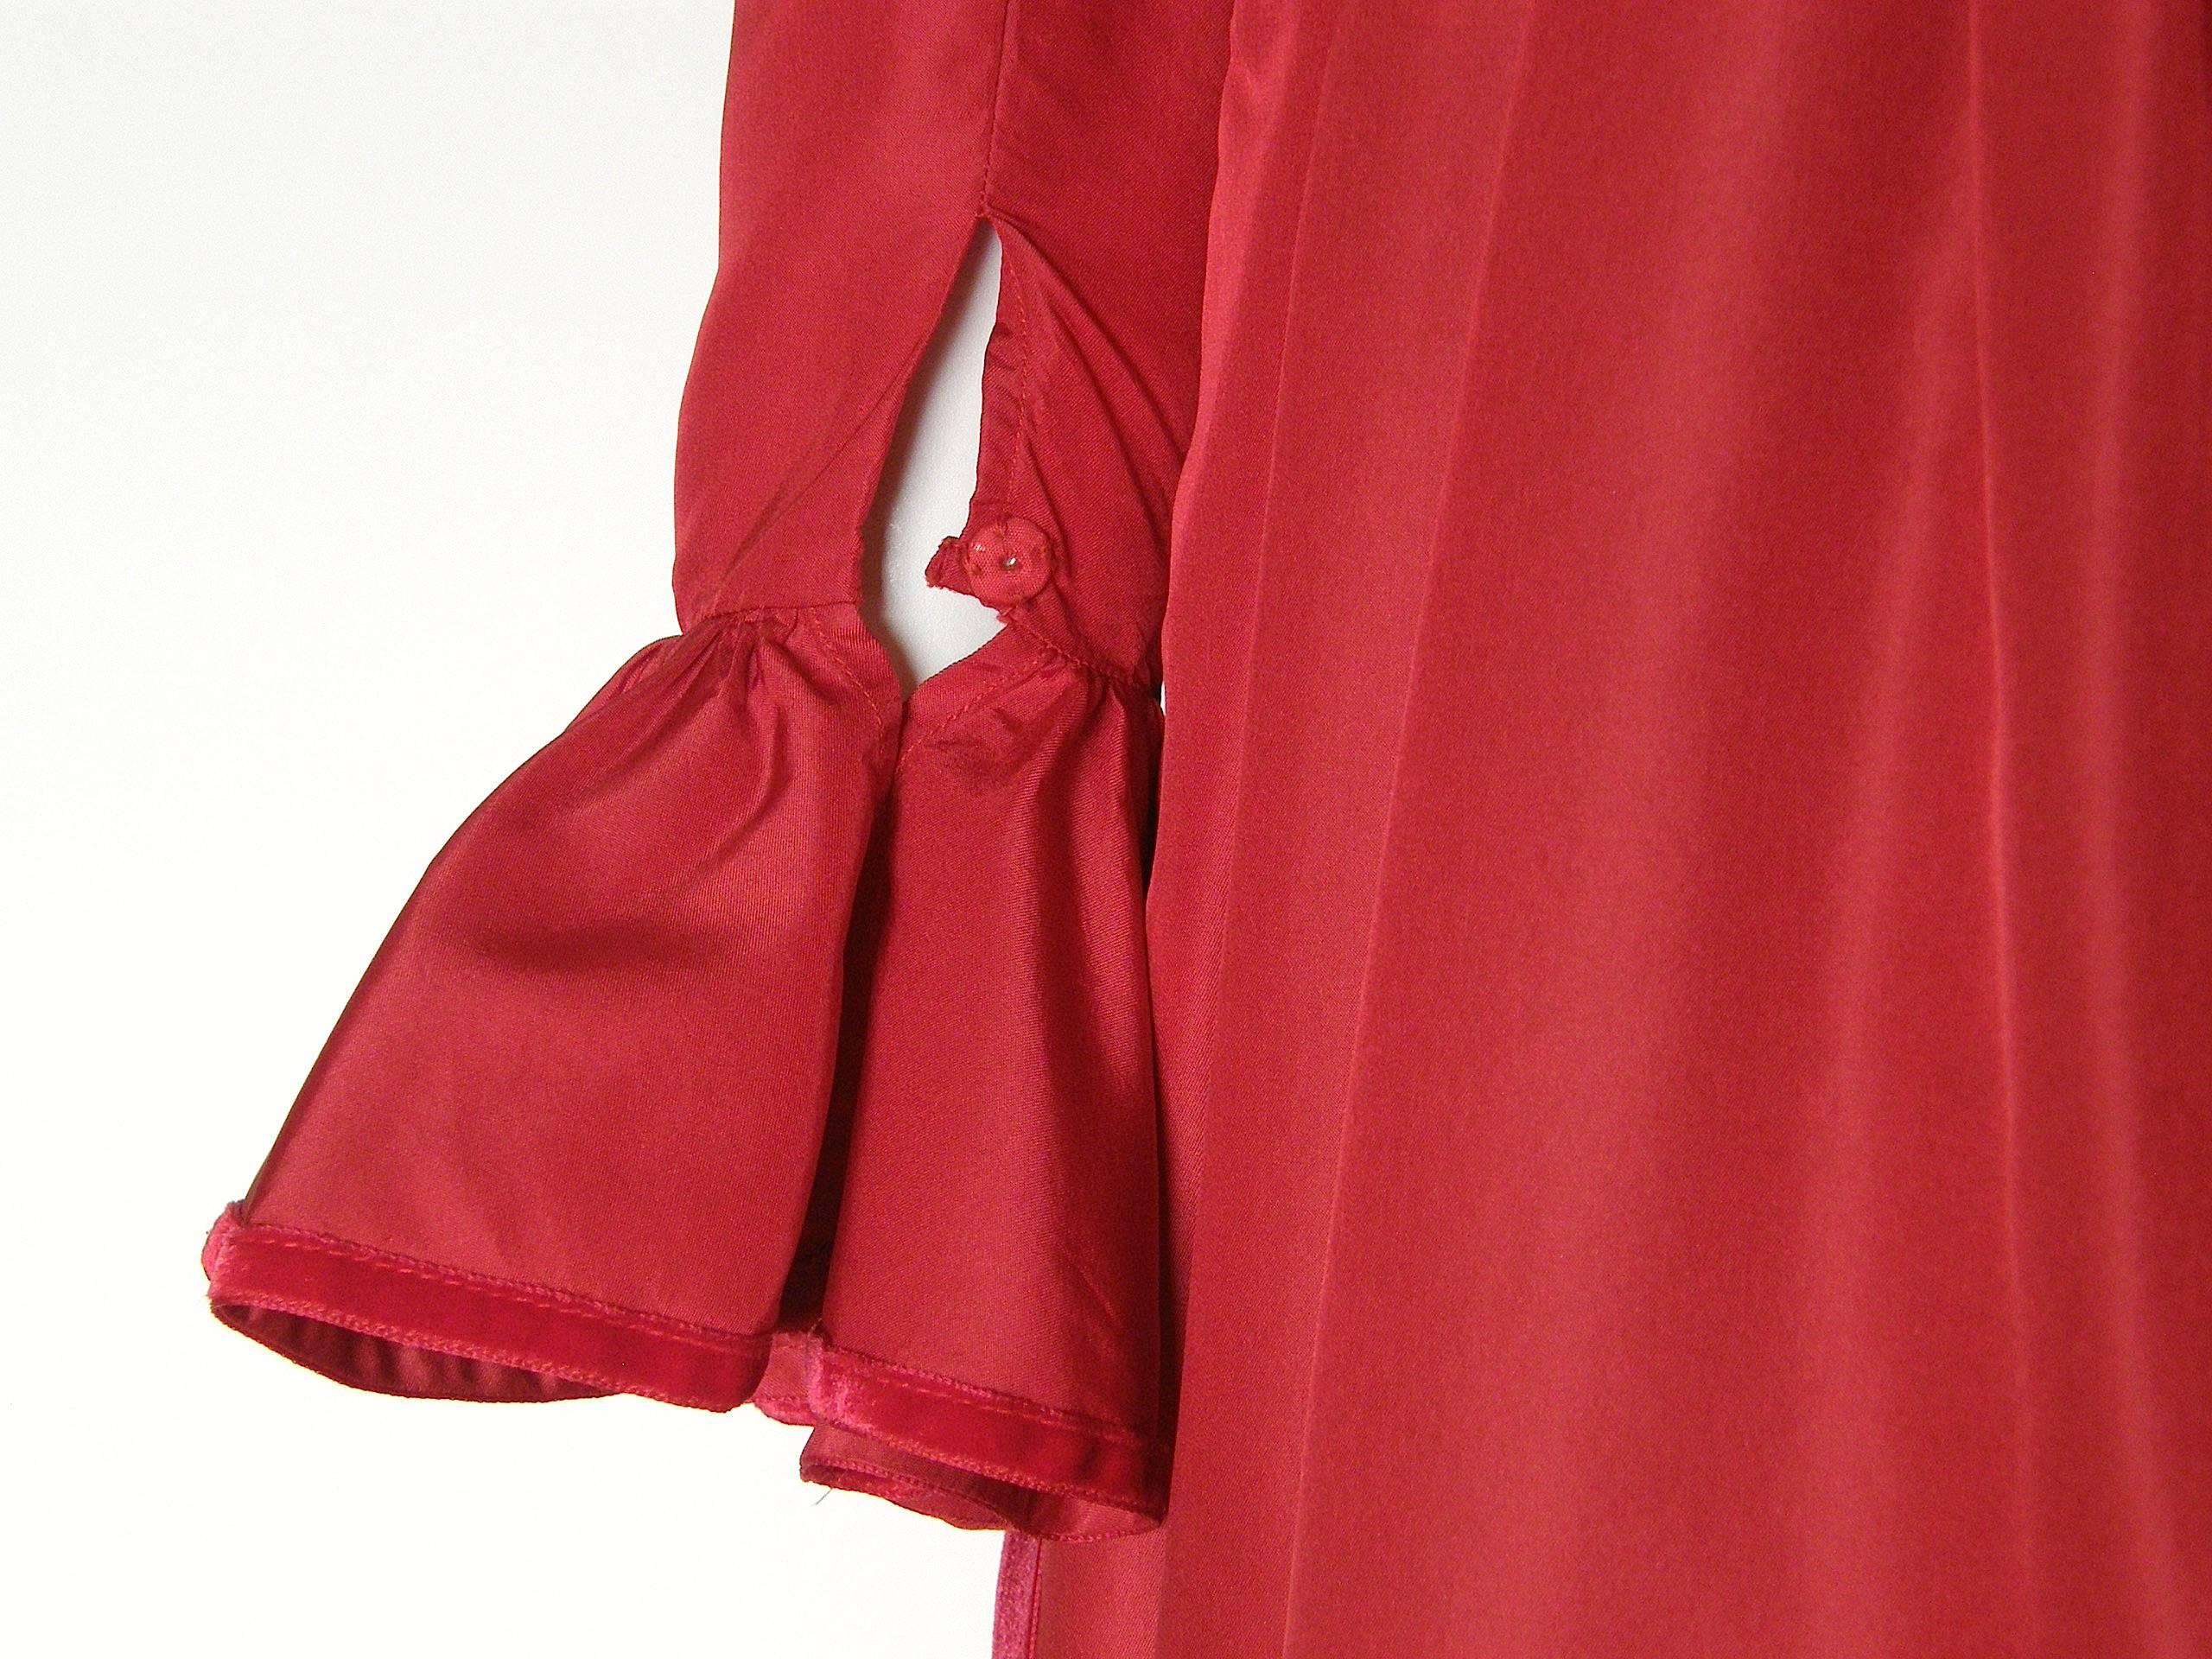 Oscar de la Renta Red Silk Taffeta Gown with Tiered Skirt and Ruffled ...